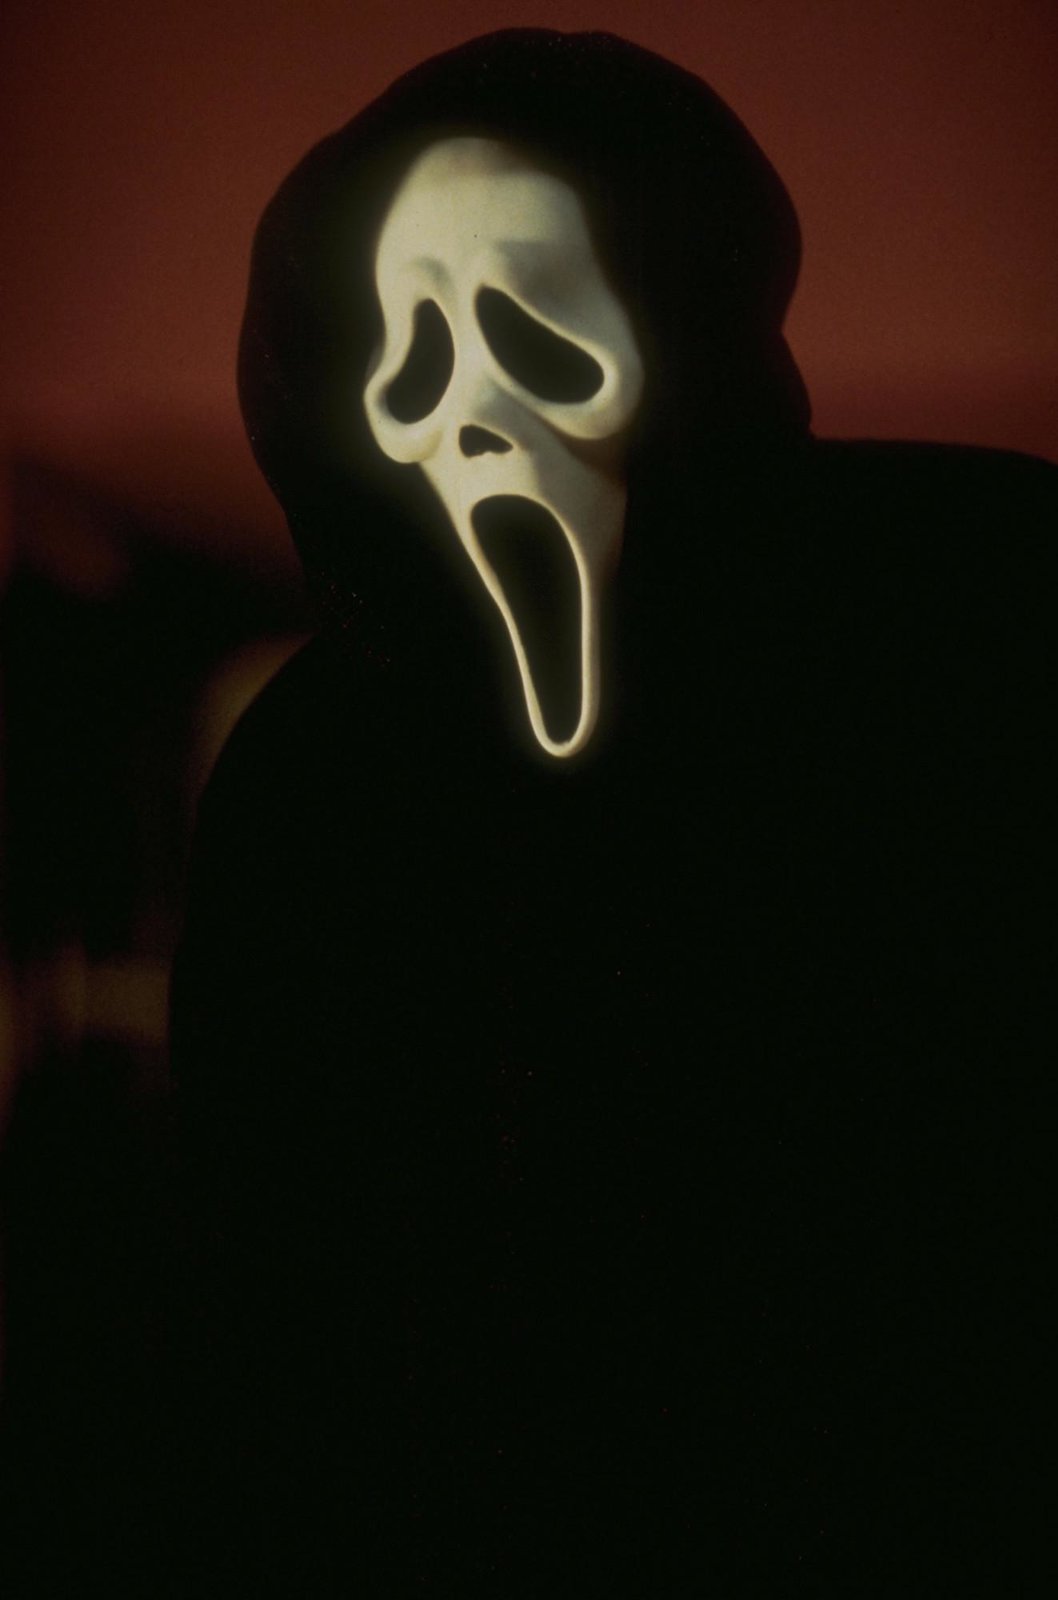 Scream 3  (4K Ultra HD) (+ Blu-ray) 